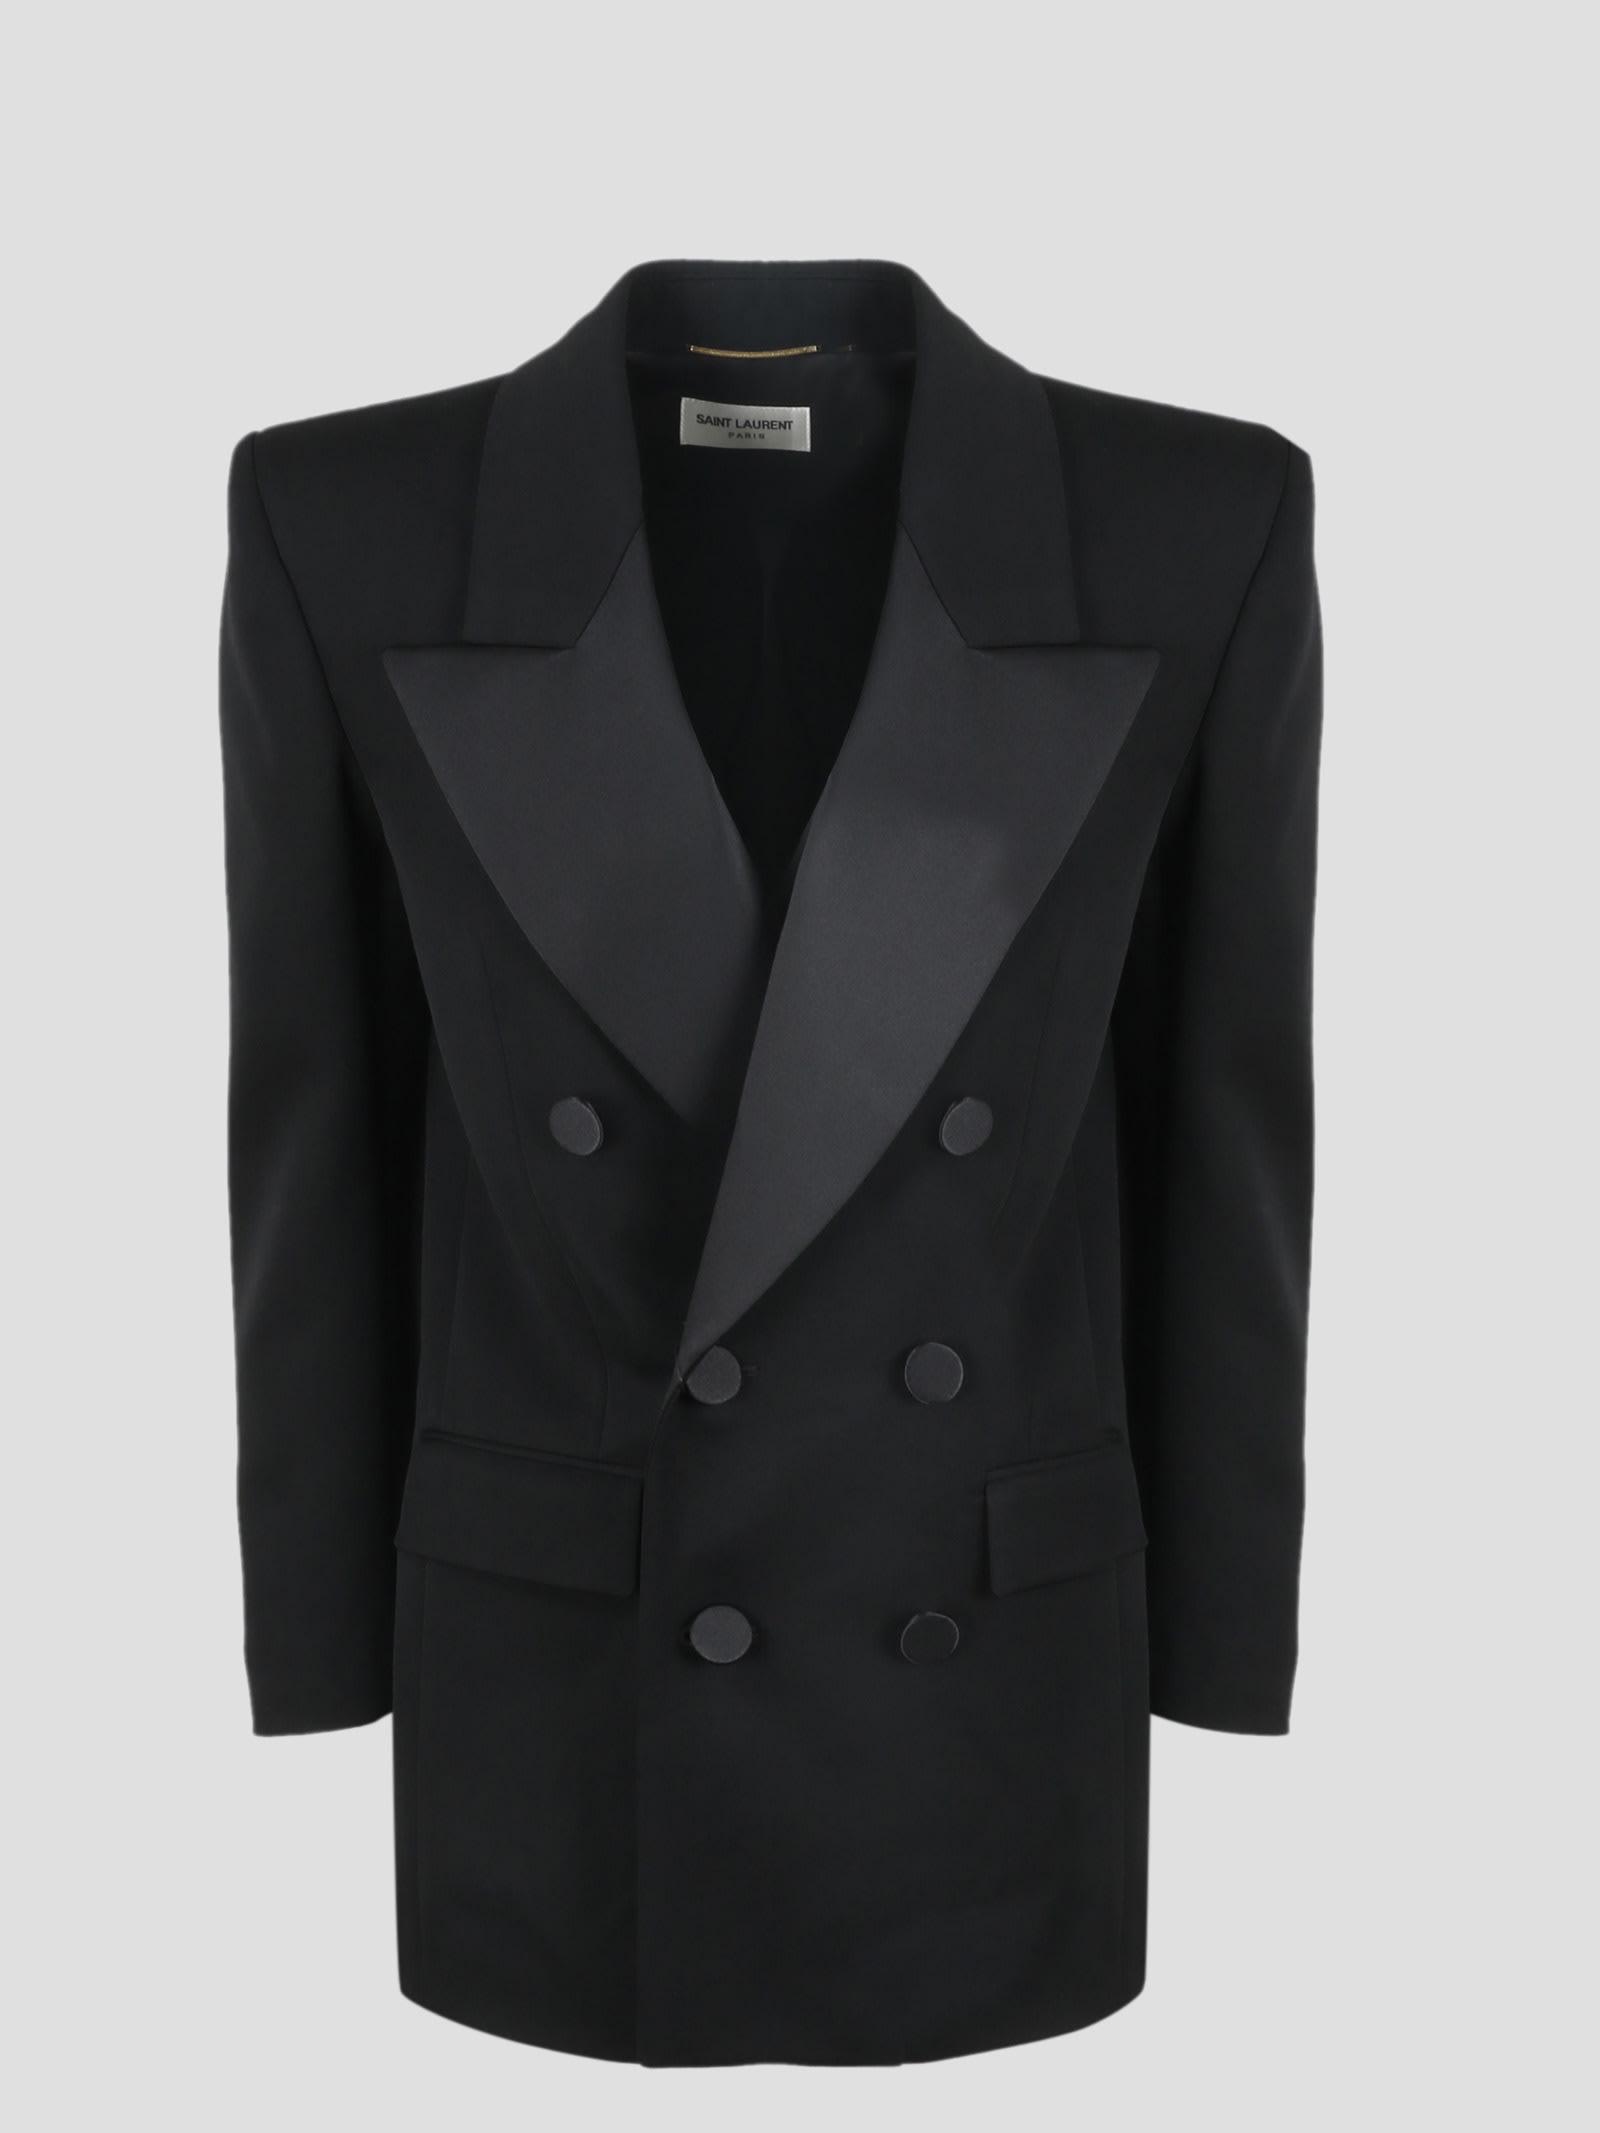 Saint Laurent Double-breasted Tuxedo Jacket in Black | Lyst